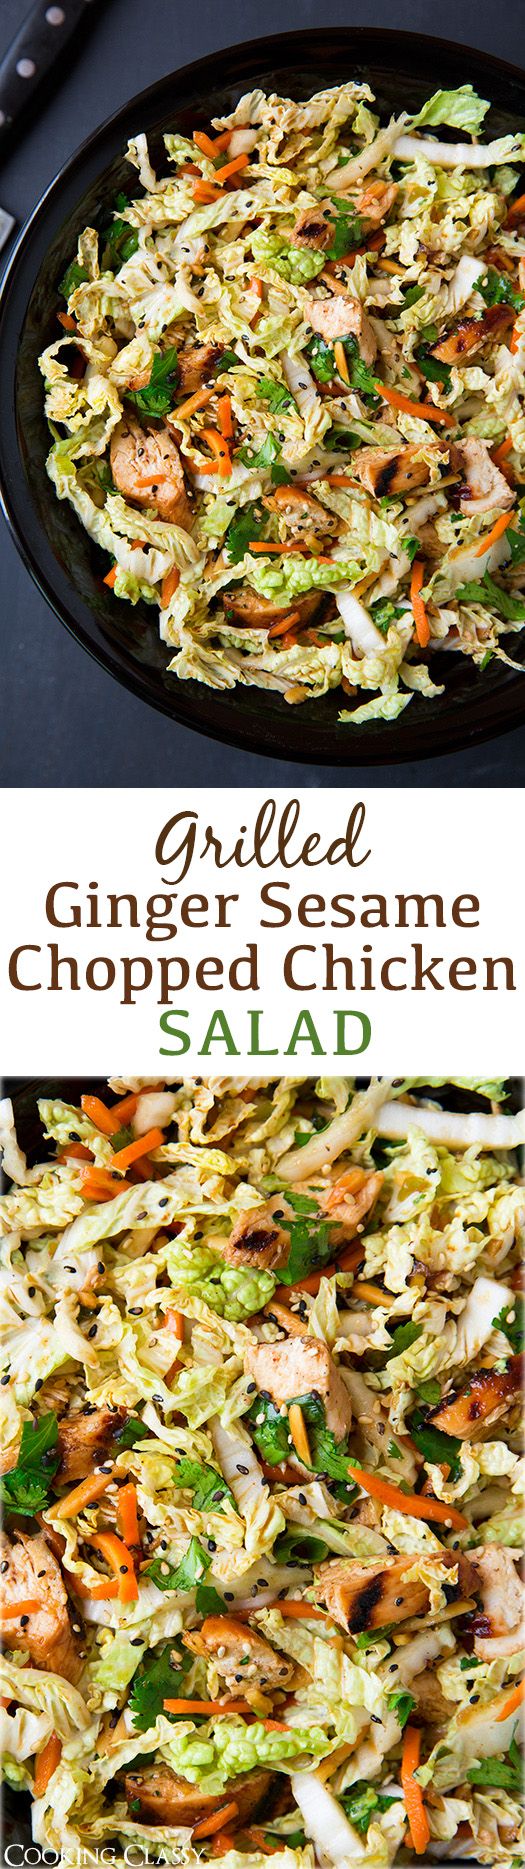 Most Pinned Salad Recipe on Pinterest 7